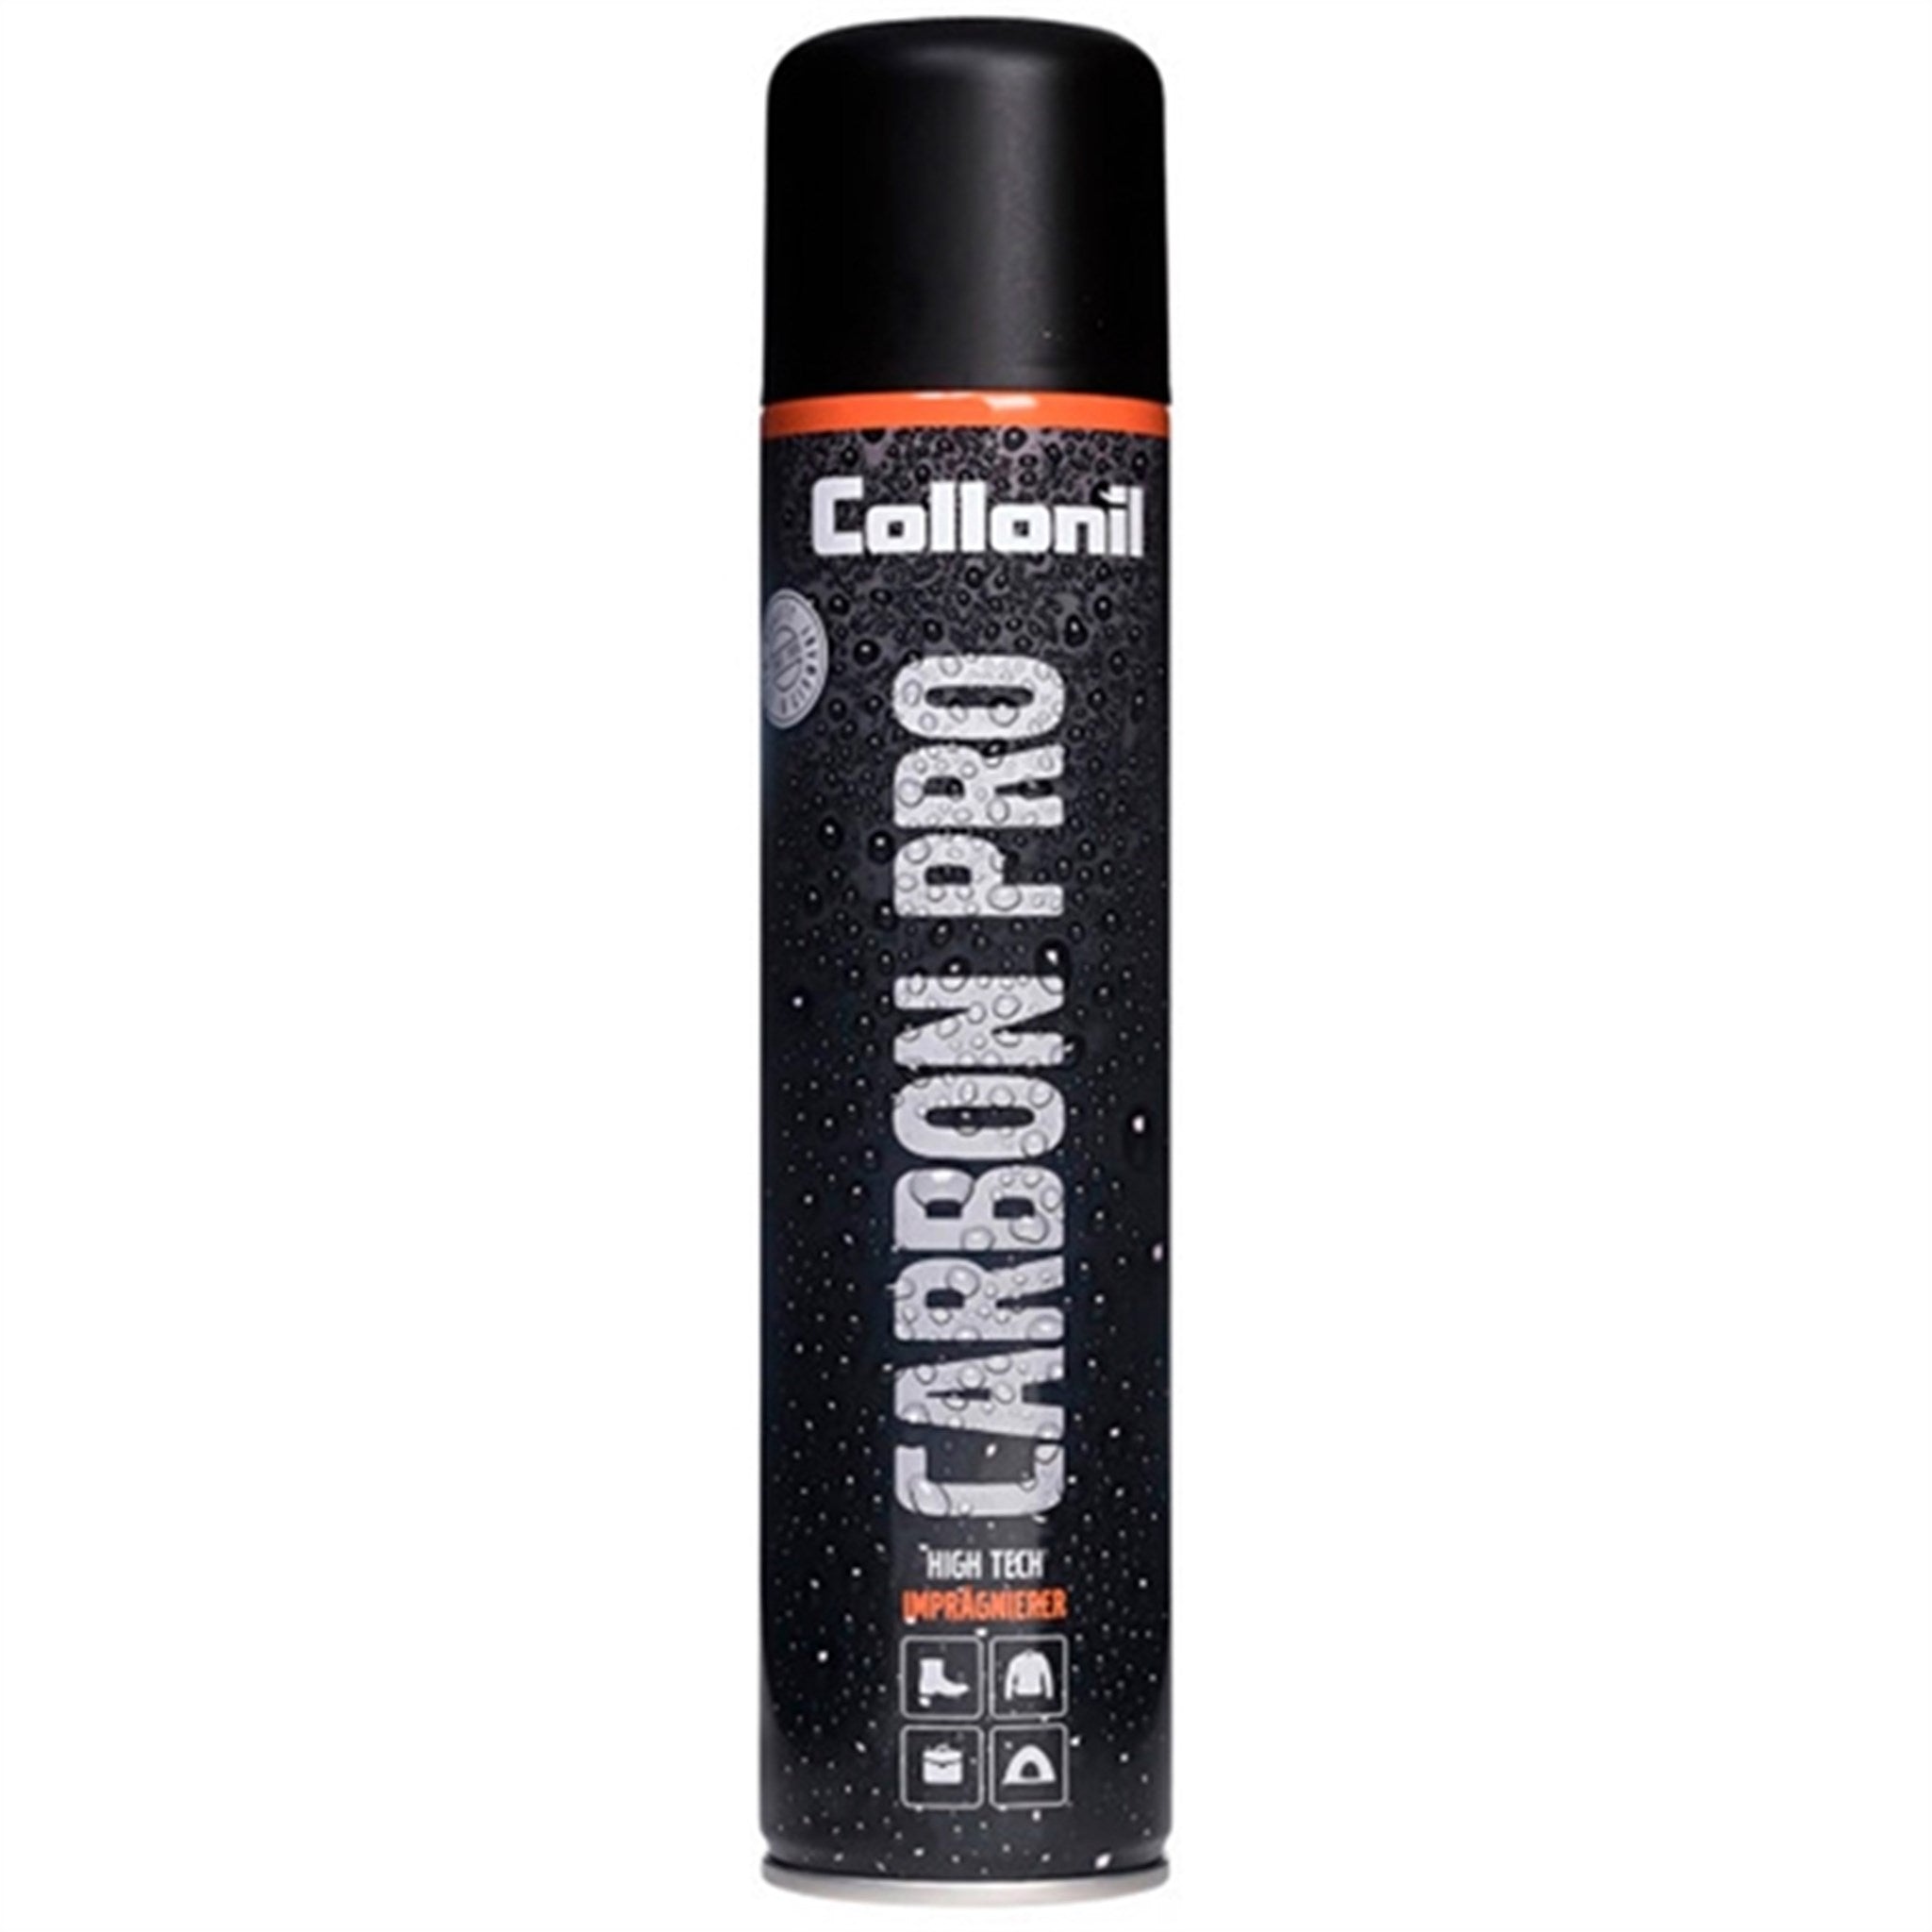 Collonil Carbon Pro Iimpregnation 300 ml